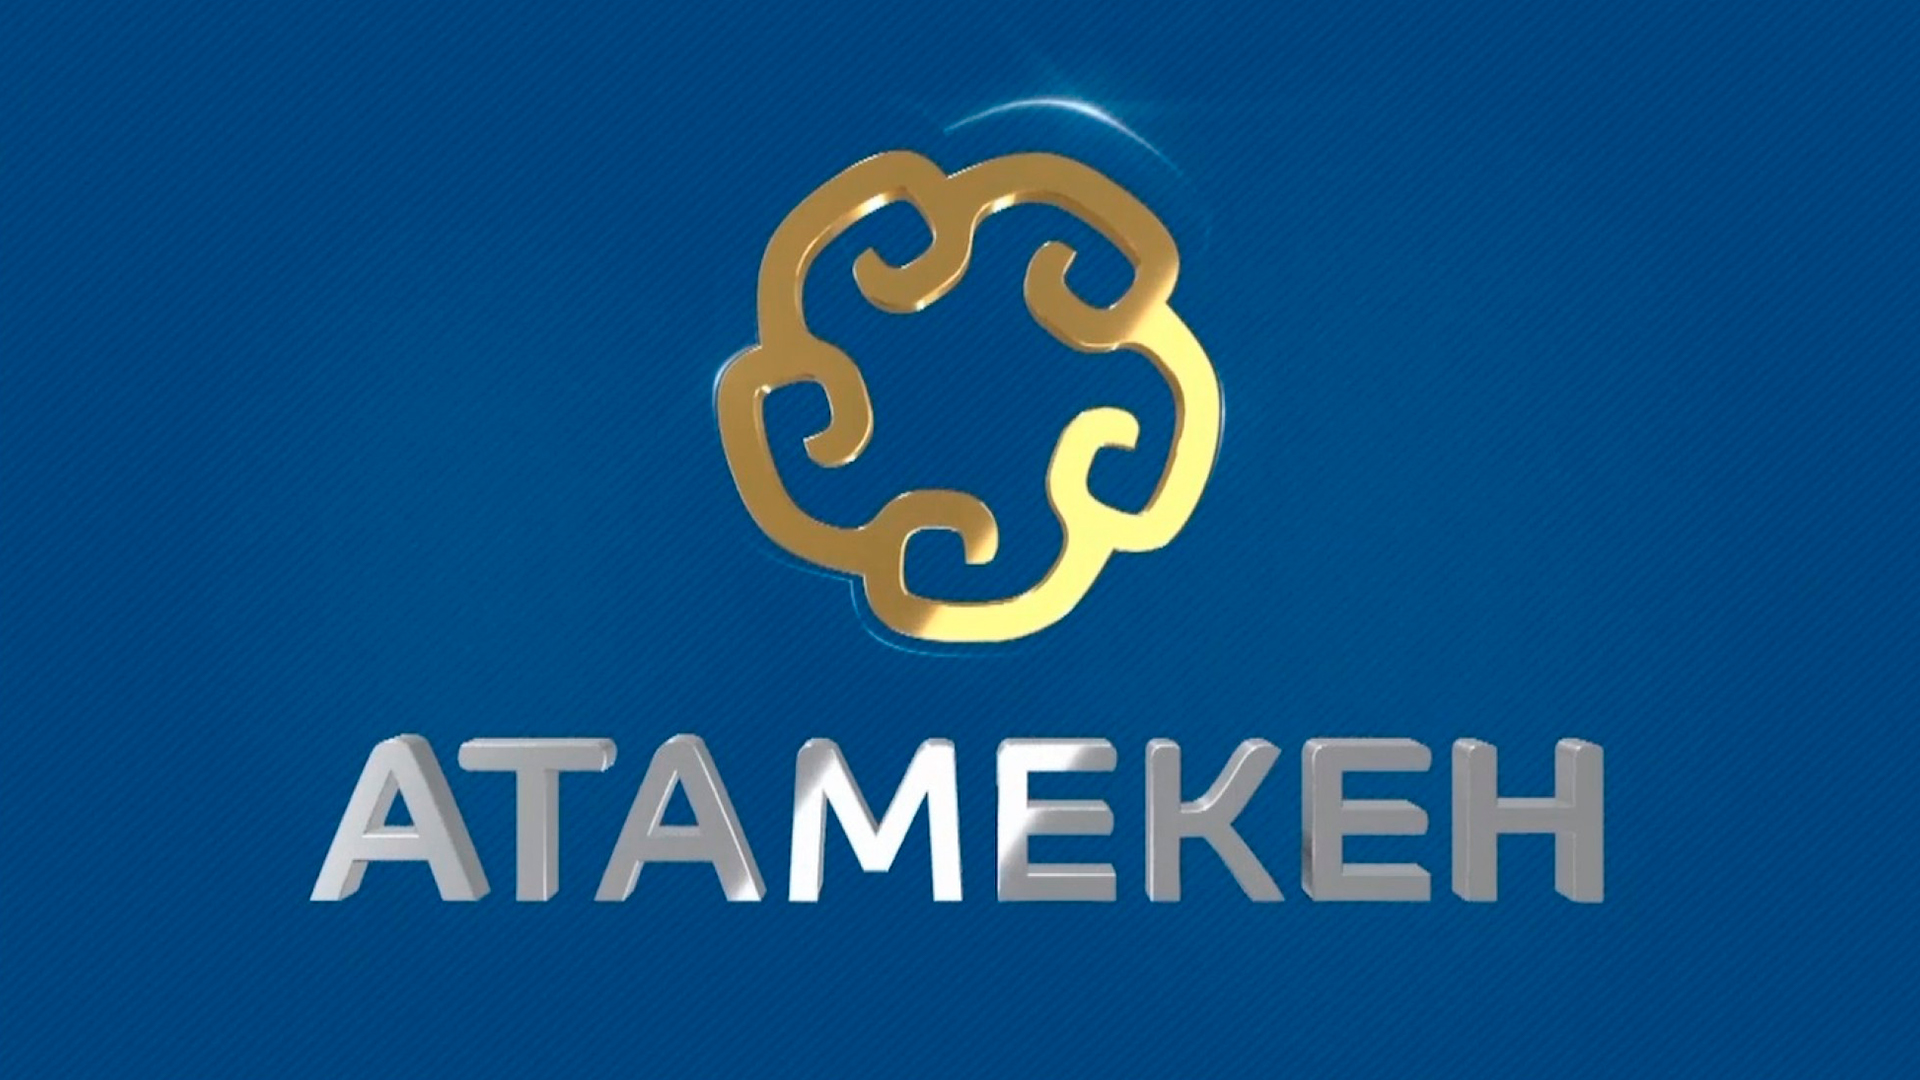 Национальной палате предпринимателей казахстана. Атамекен эмблема. Атамекен палата предпринимателей. Национальная палата предпринимателей «Атамекен» logo. НПП Атамекен логотип.